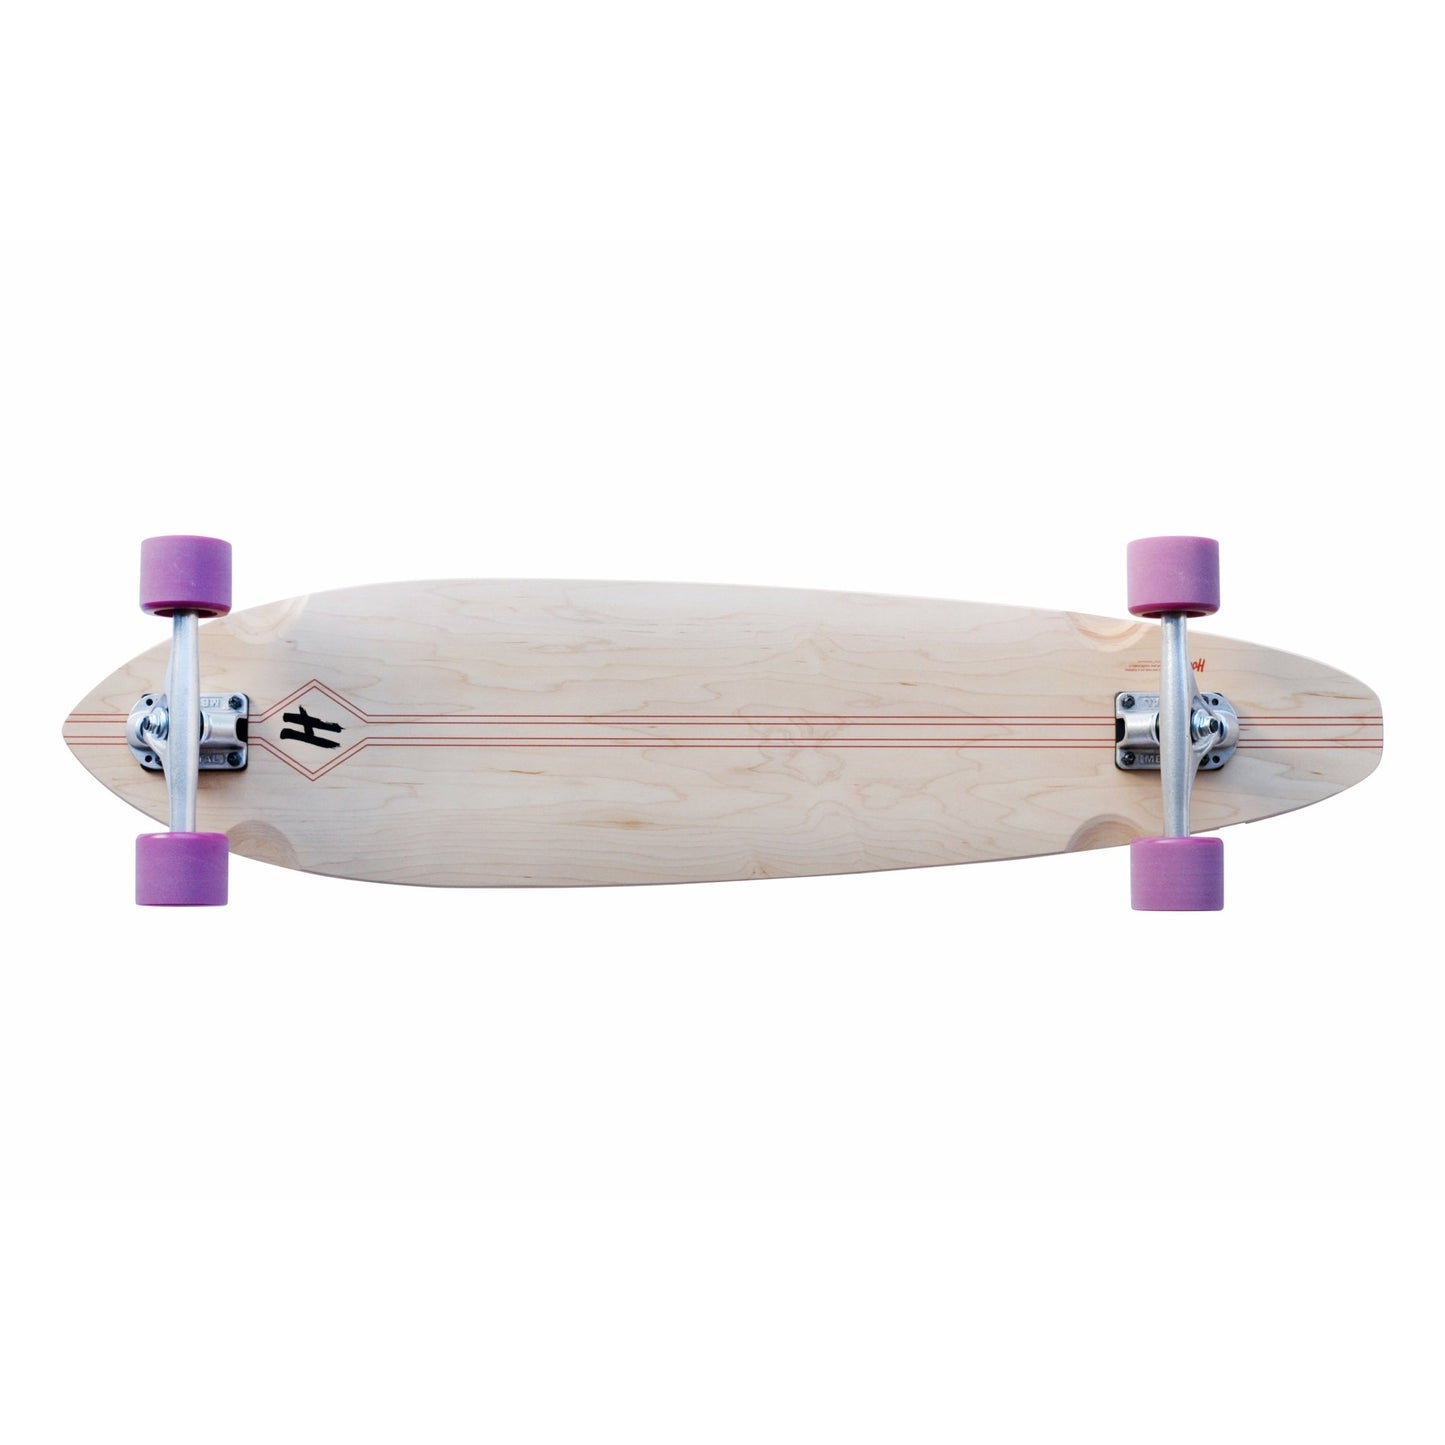 Holiday Skateboards - "Salty Sweet" Longboard - Blush 38" - Parliamentskateshop